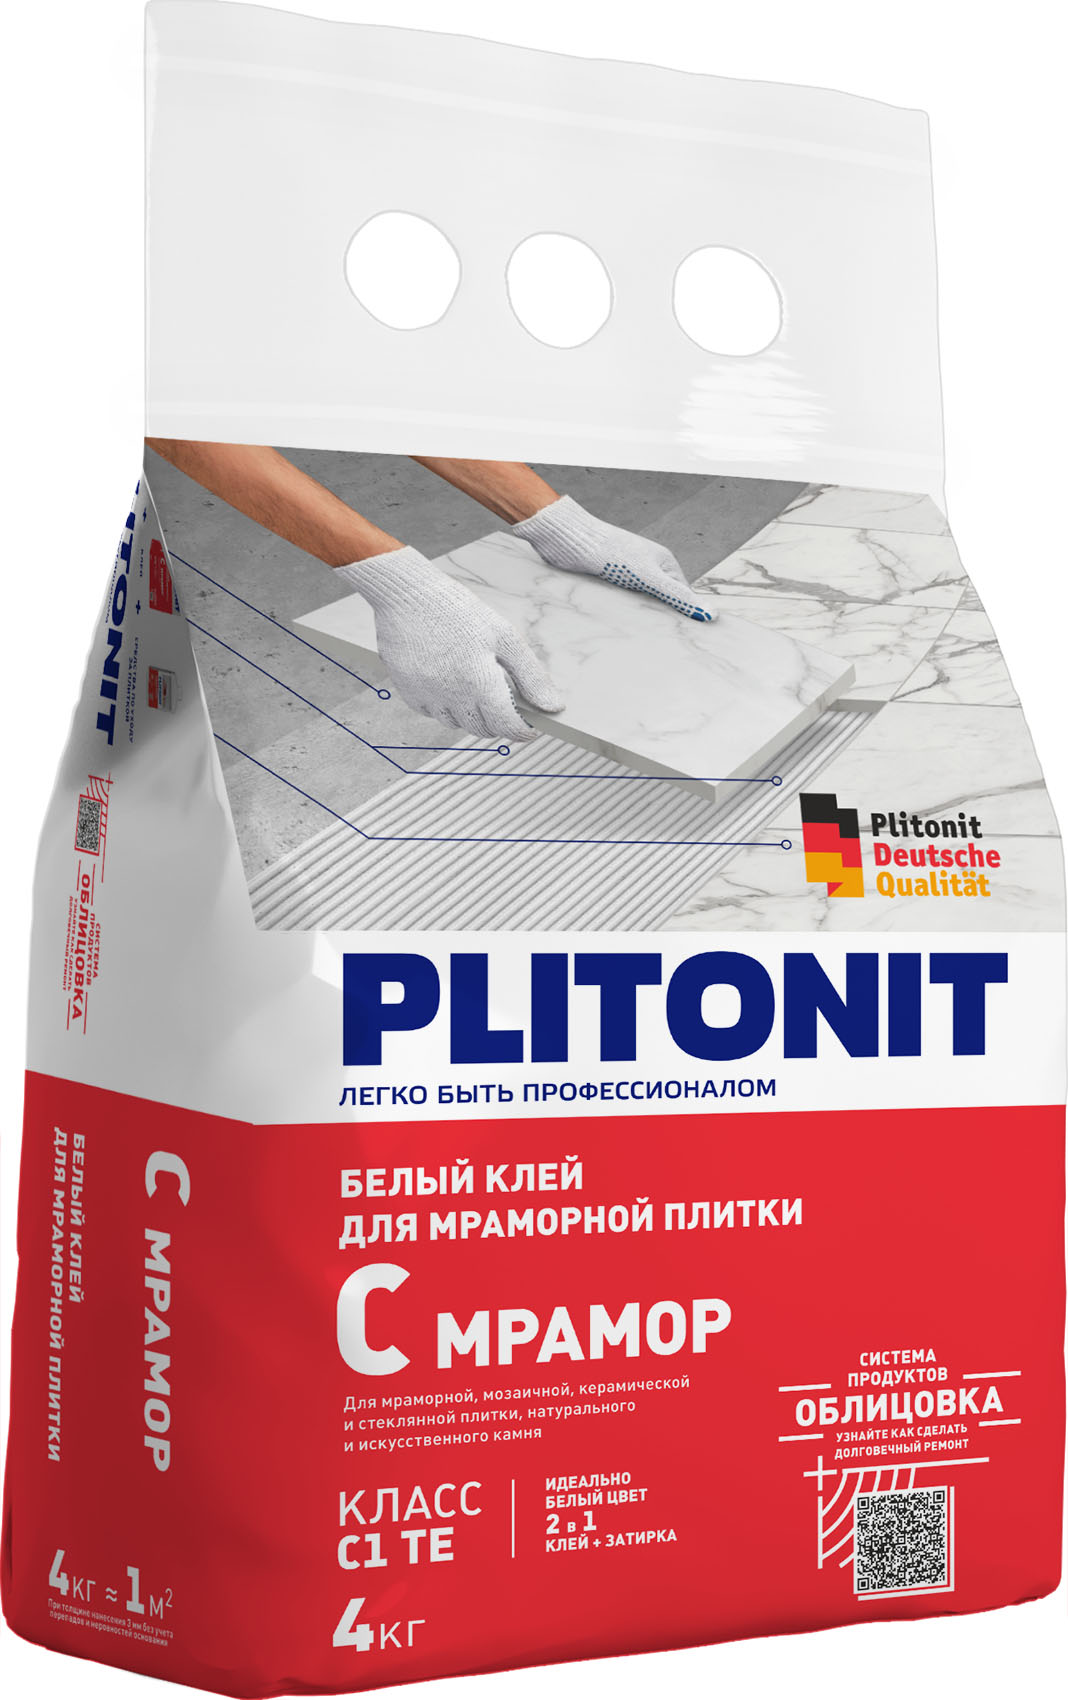 PLITONIT С мрамор -4 клей для мраморной плитки супер белый, класс С1ТЕ , PLITONIT Смрамор -4 клей для мраморной плитки супер белый, класс С1ТЕ 